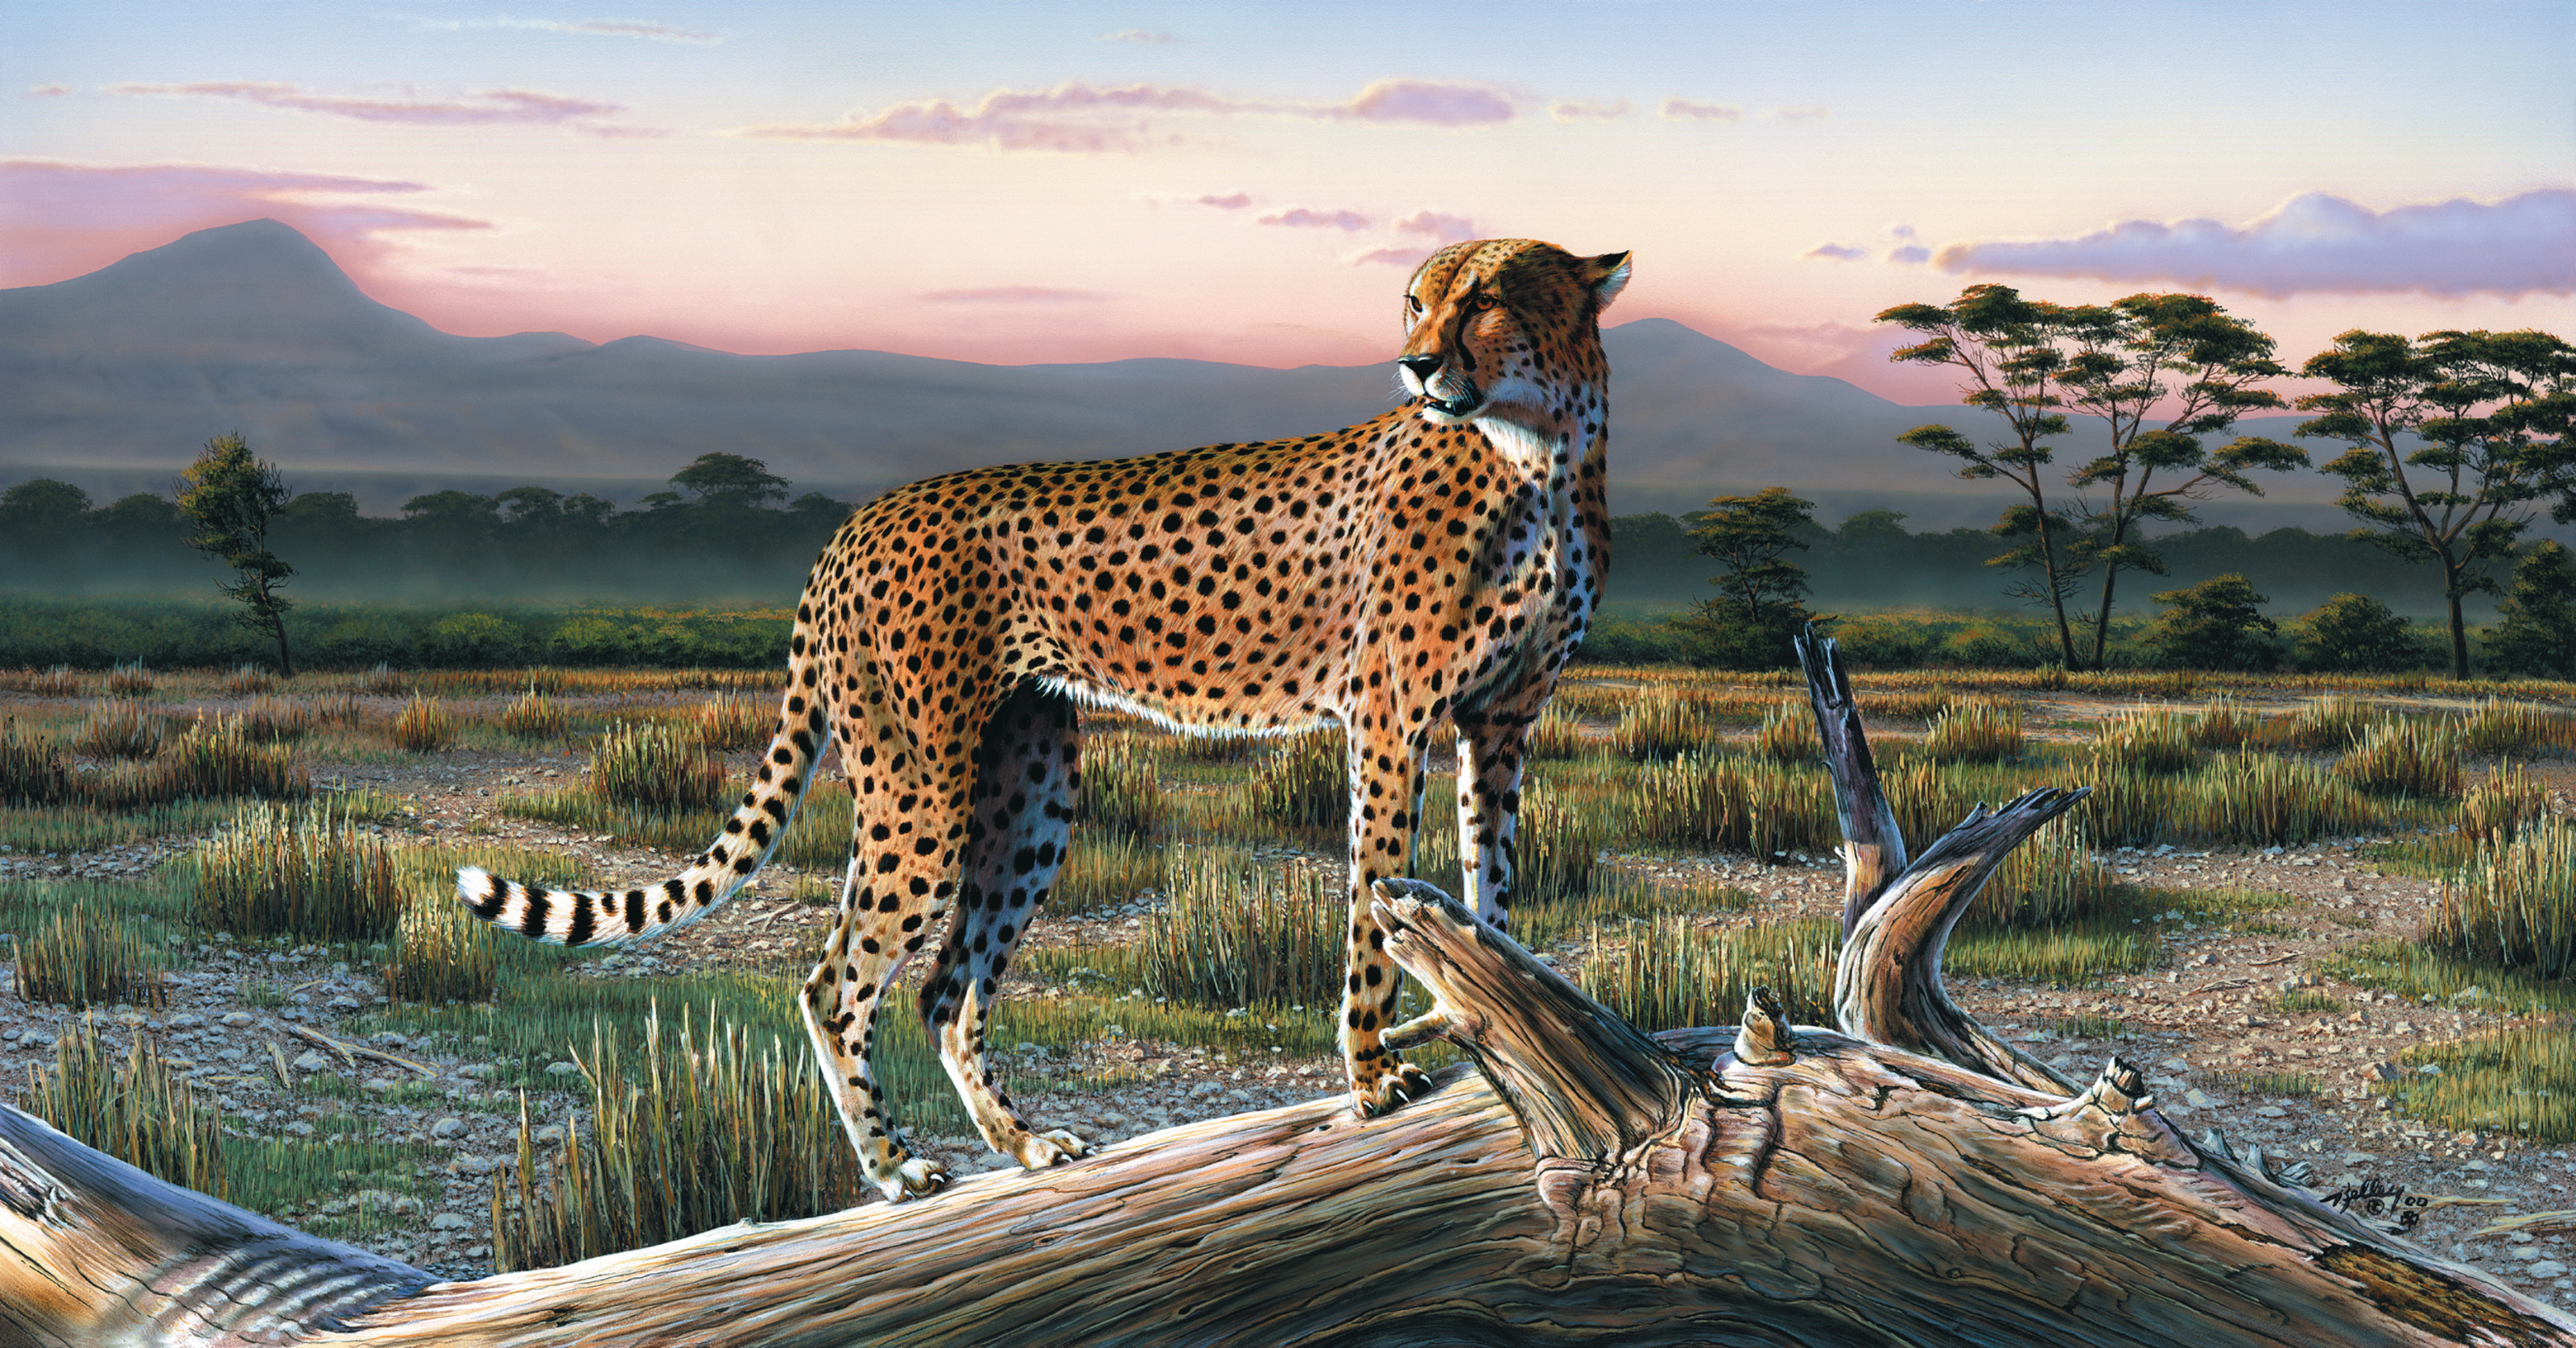 Off White Leopard Print Wallpaper Mural